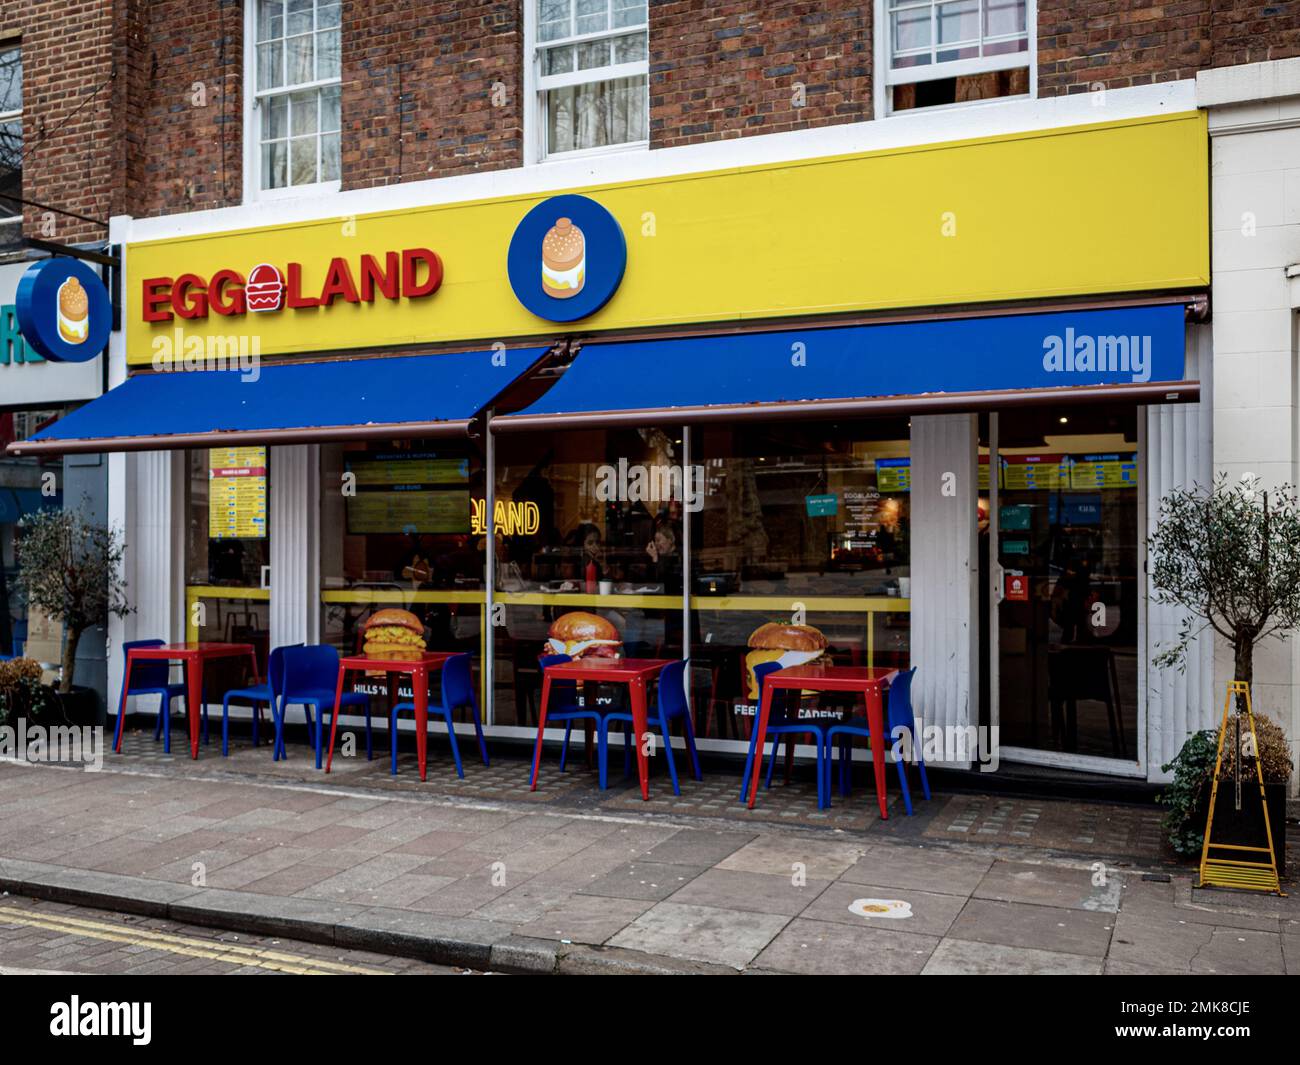 Ristorante Eggland al 5-7 di Tottenham Street, Londra. Eggland ha aperto nel 2021, fondata da un ex rifugiato afghano, Sohail Ahmed. Foto Stock